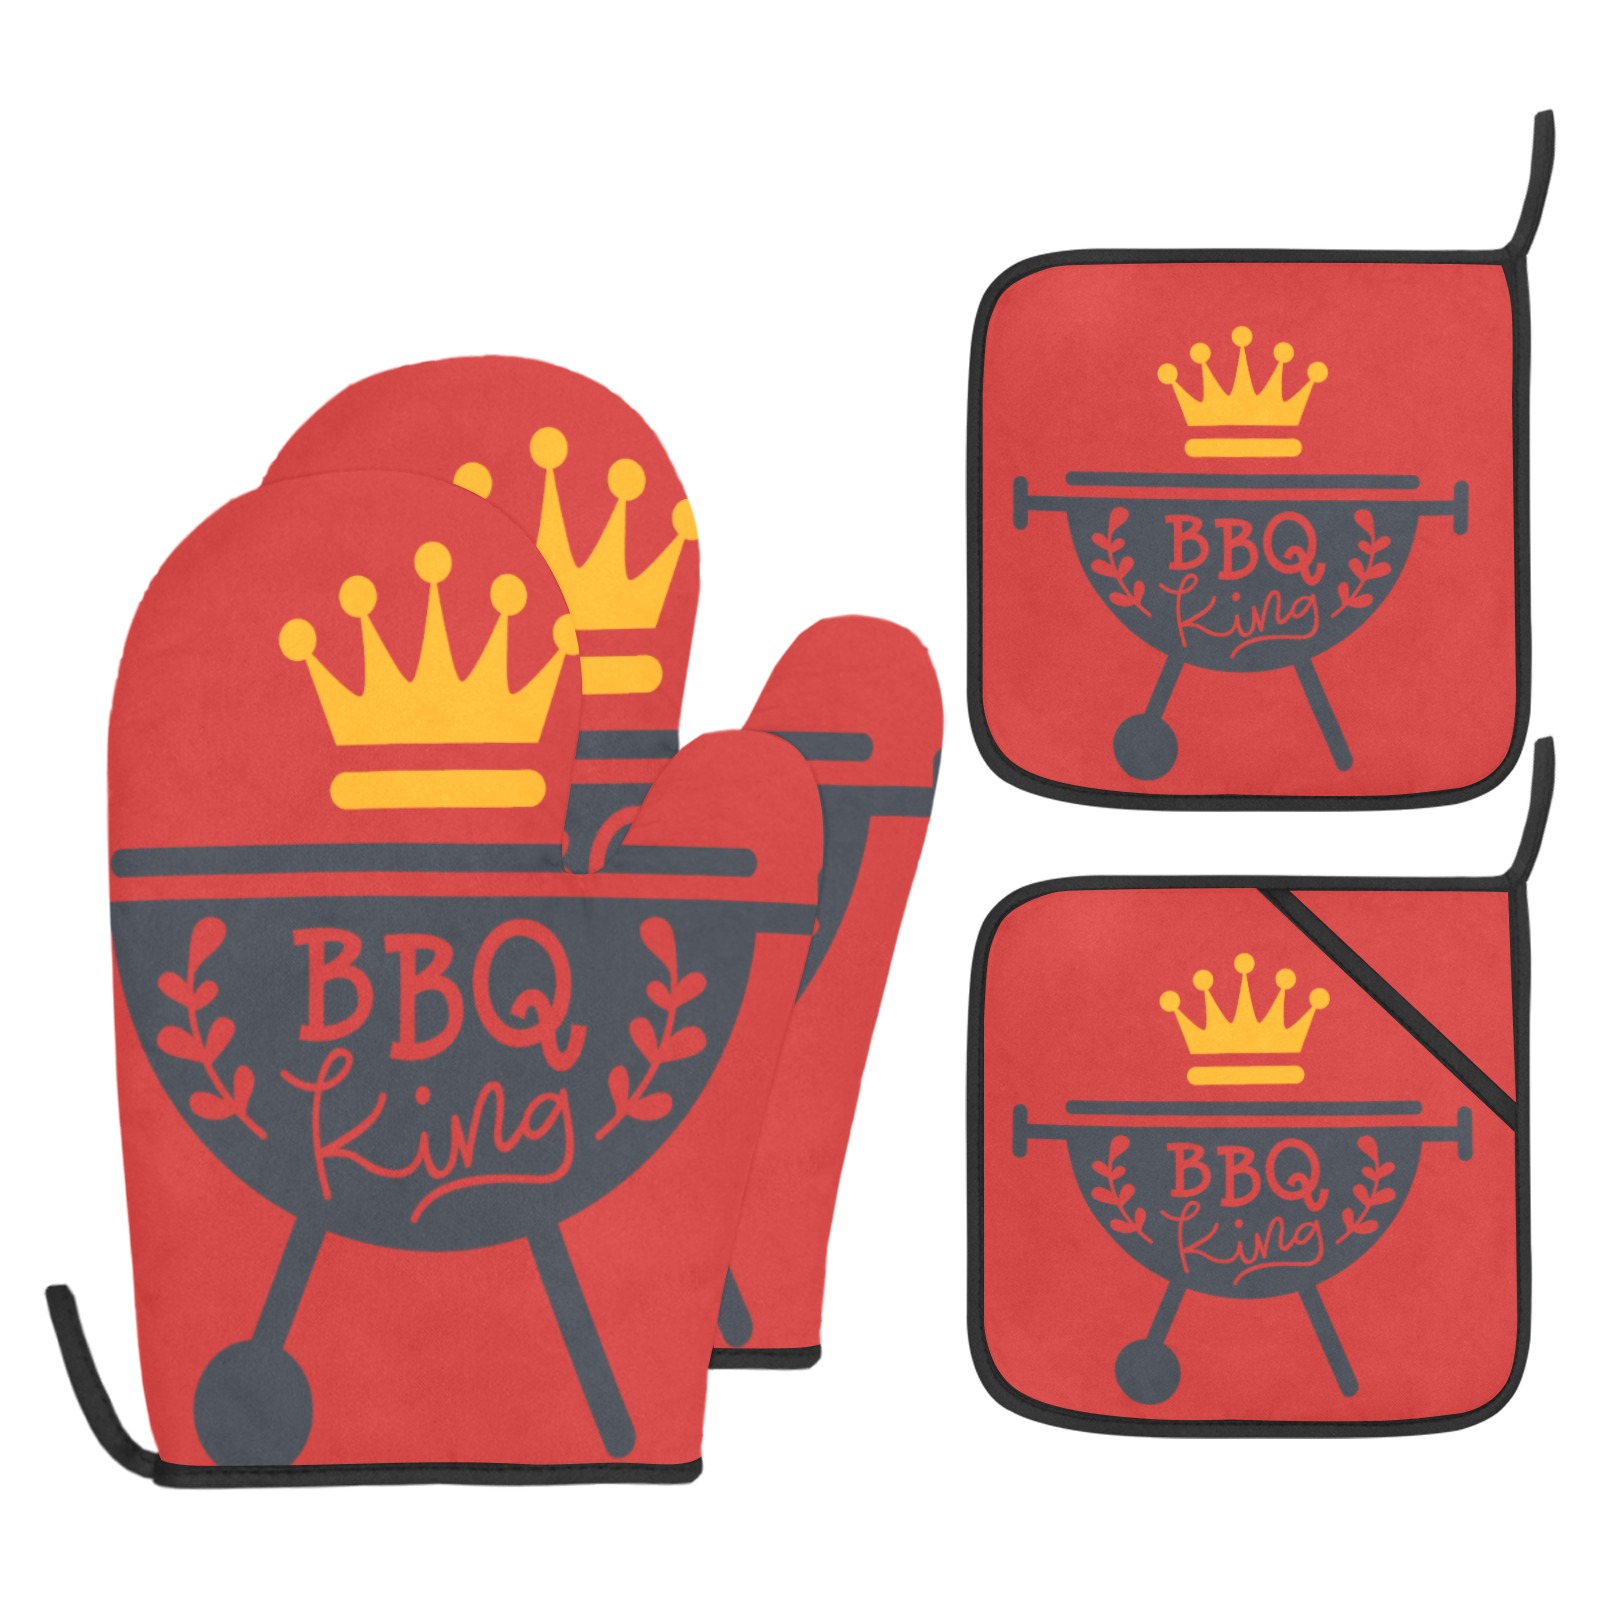 bbq-king Oven Mitt & Pot Holder